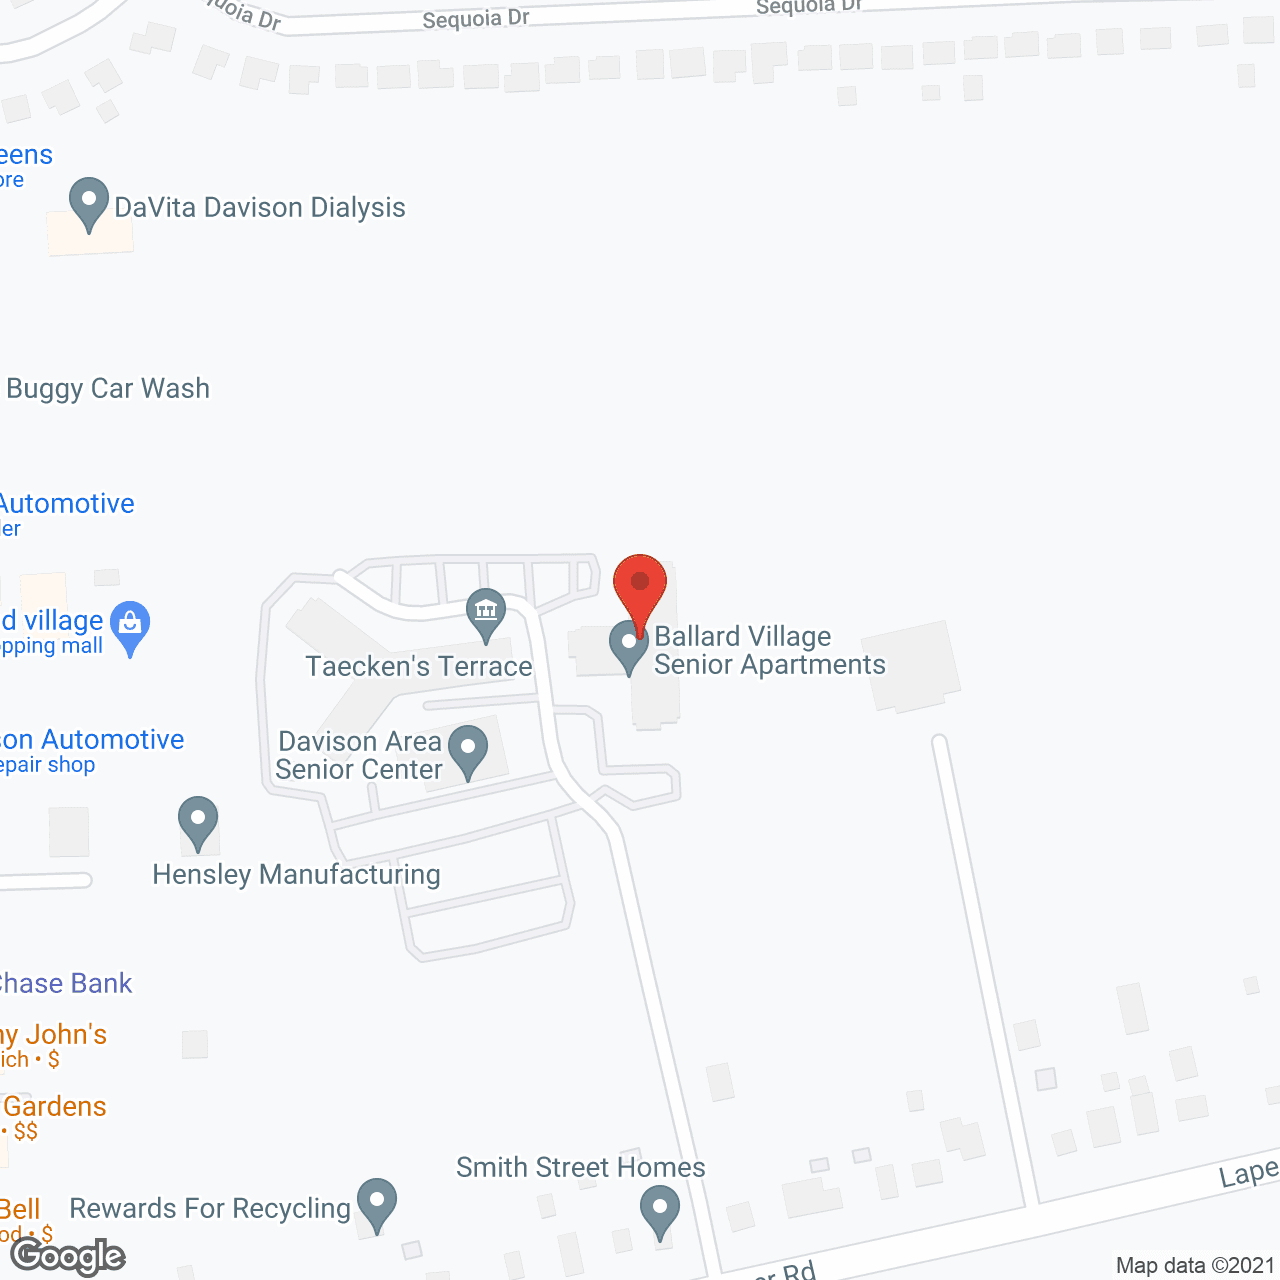 Ballard Village in google map